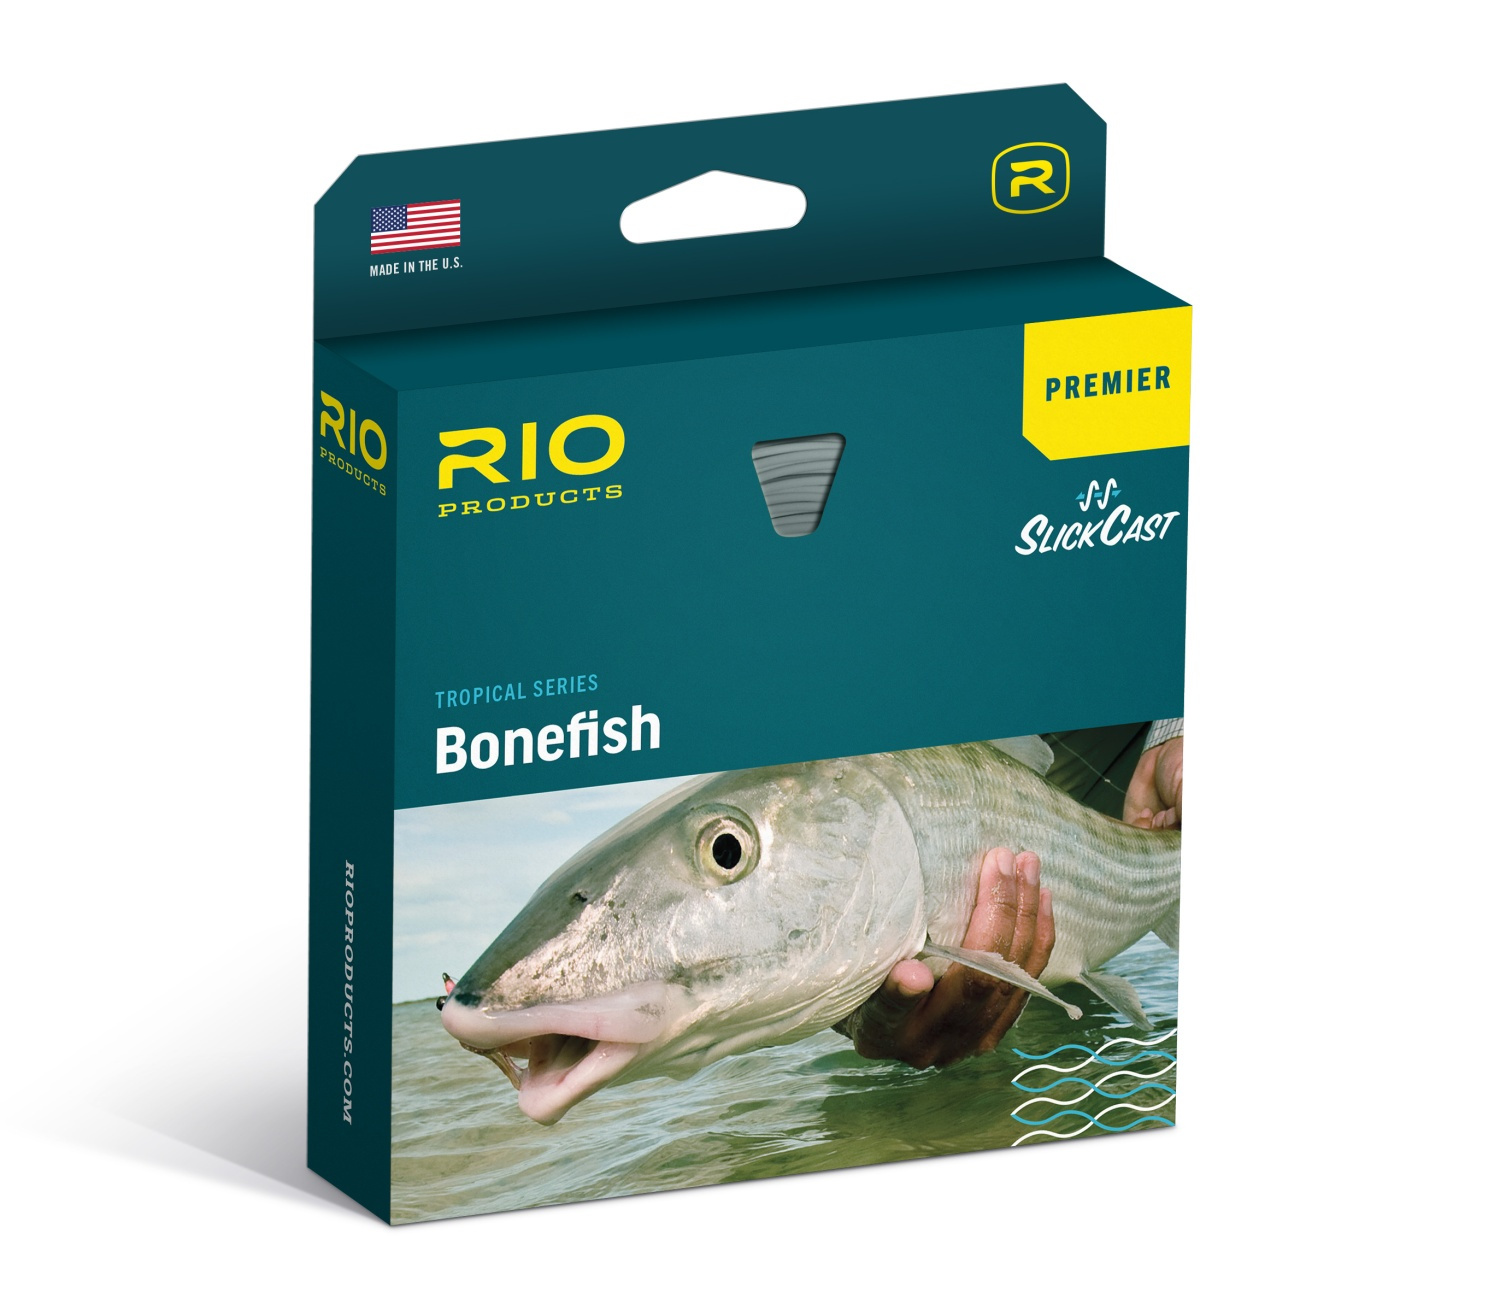 Rio Premier Bonefish WF Flyt Fluglina